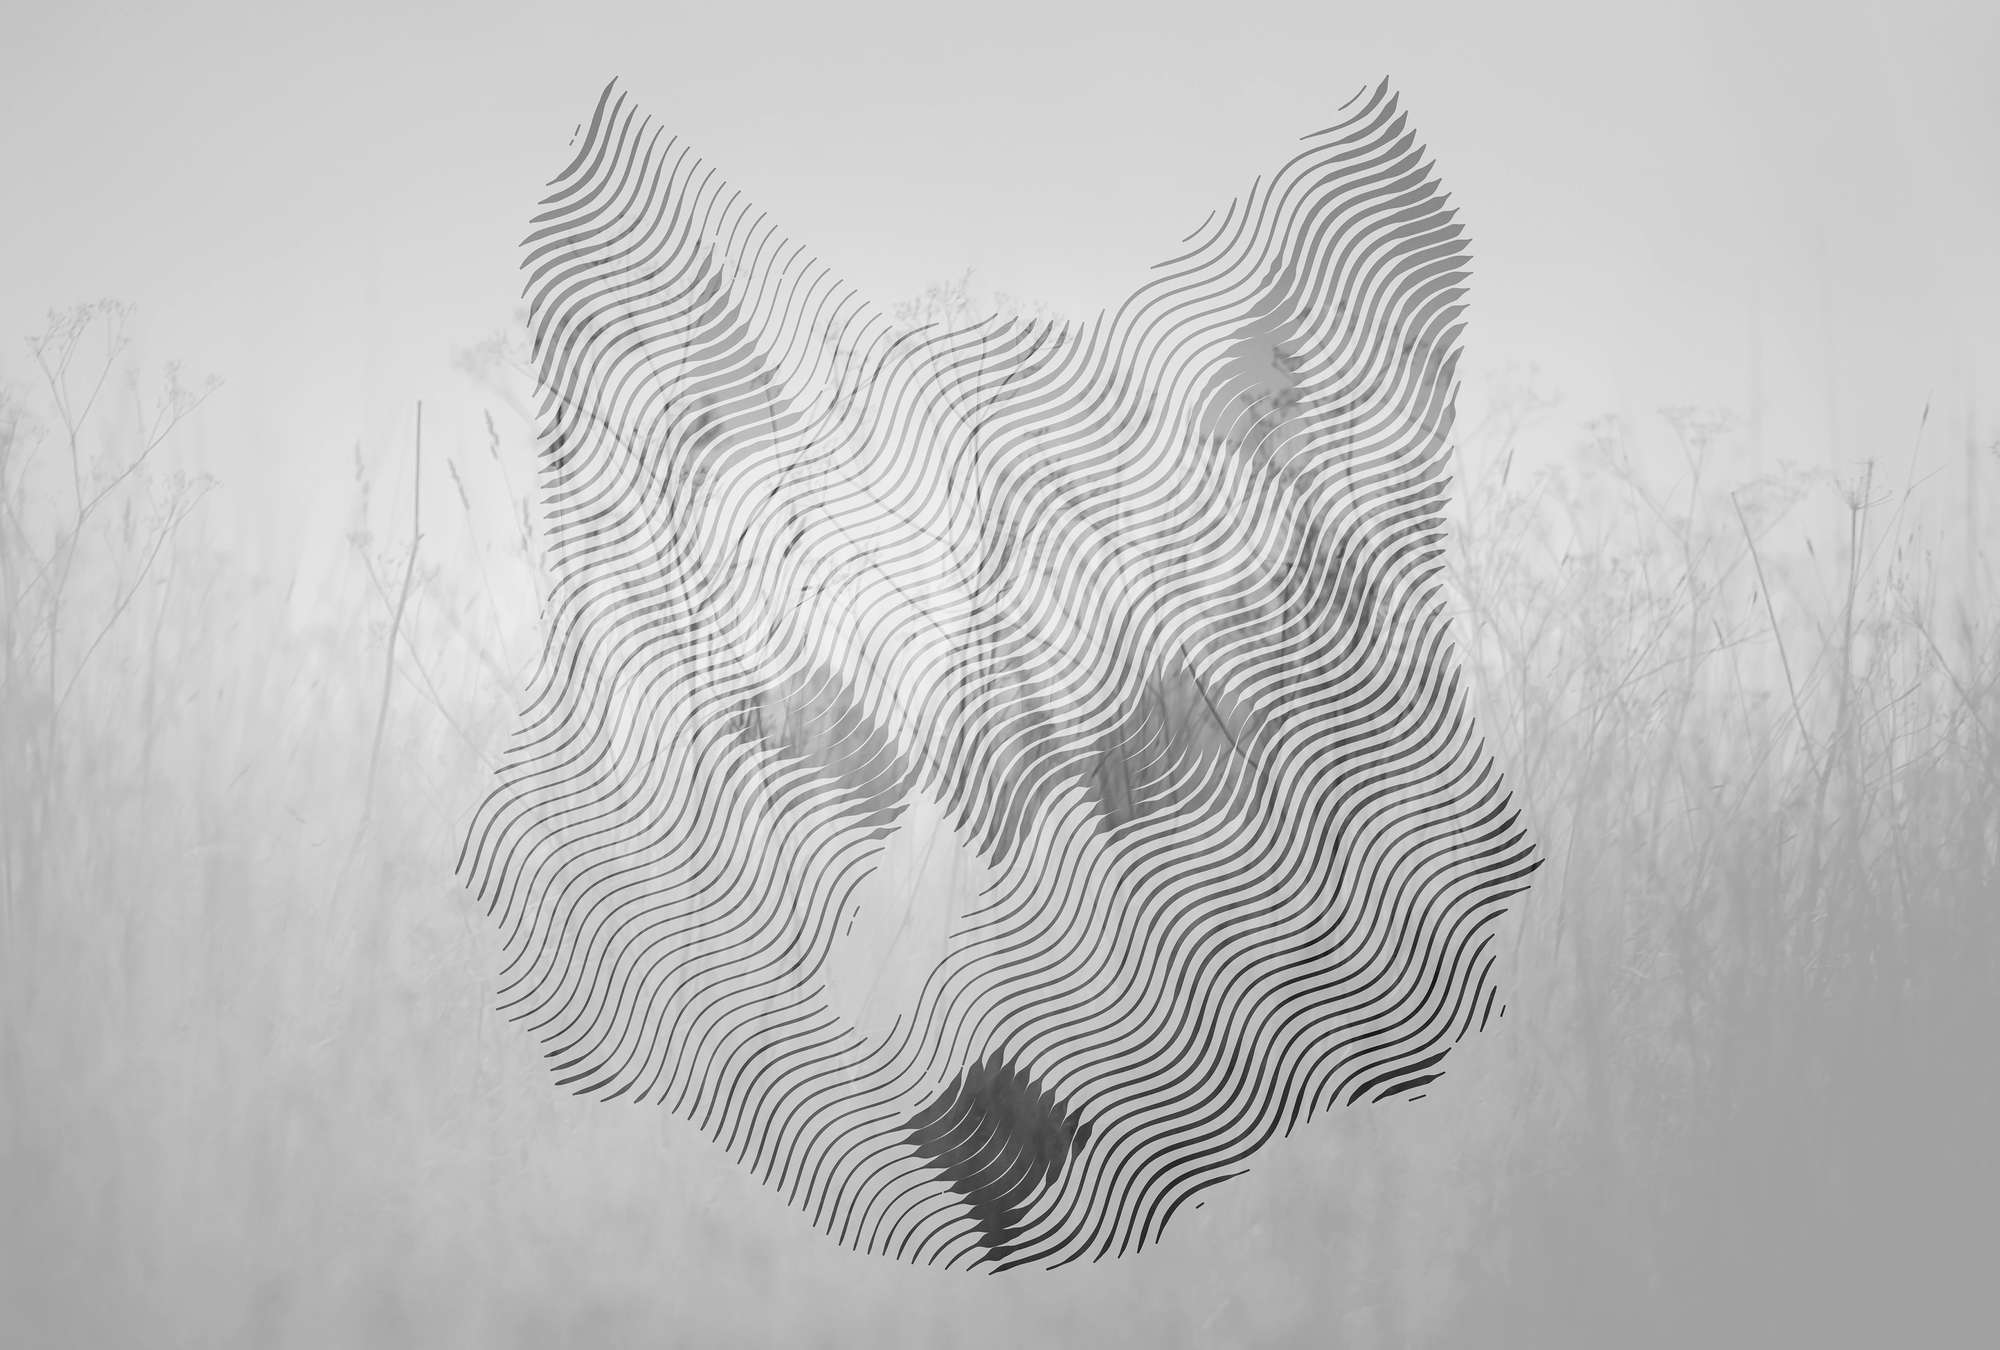             Fotomurali Meadow & Fox, design naturale misto - grigio, bianco, nero
        